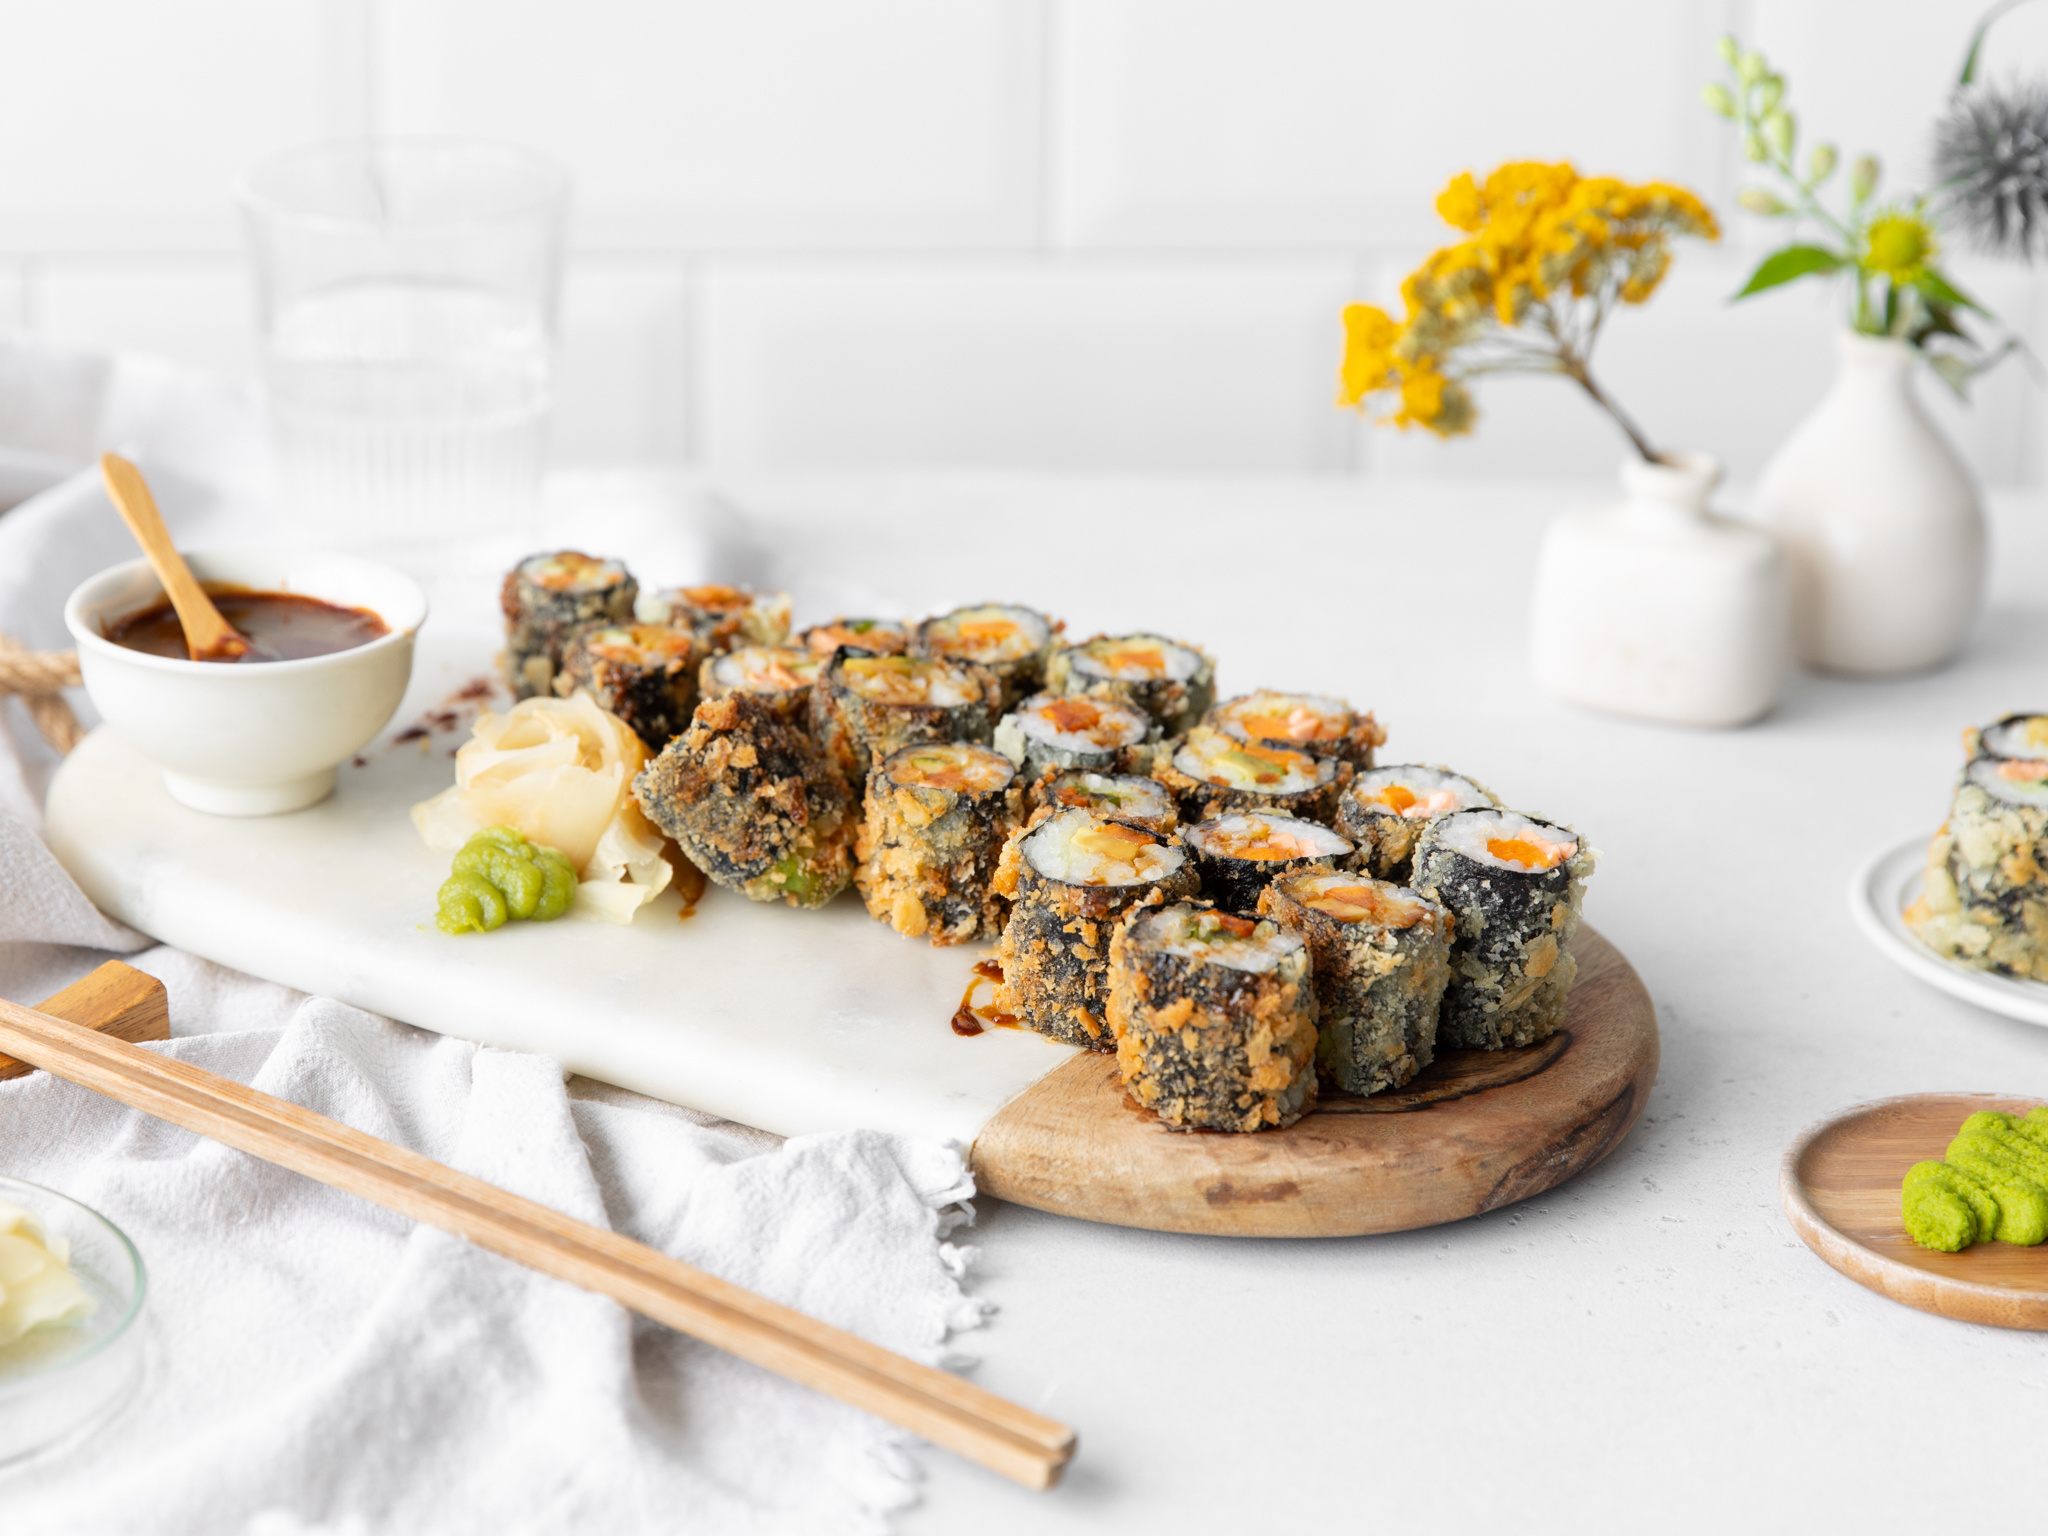 Sushi: Tempura rolls, A type of Japanese cuisine. 2050x1540 HD Wallpaper.